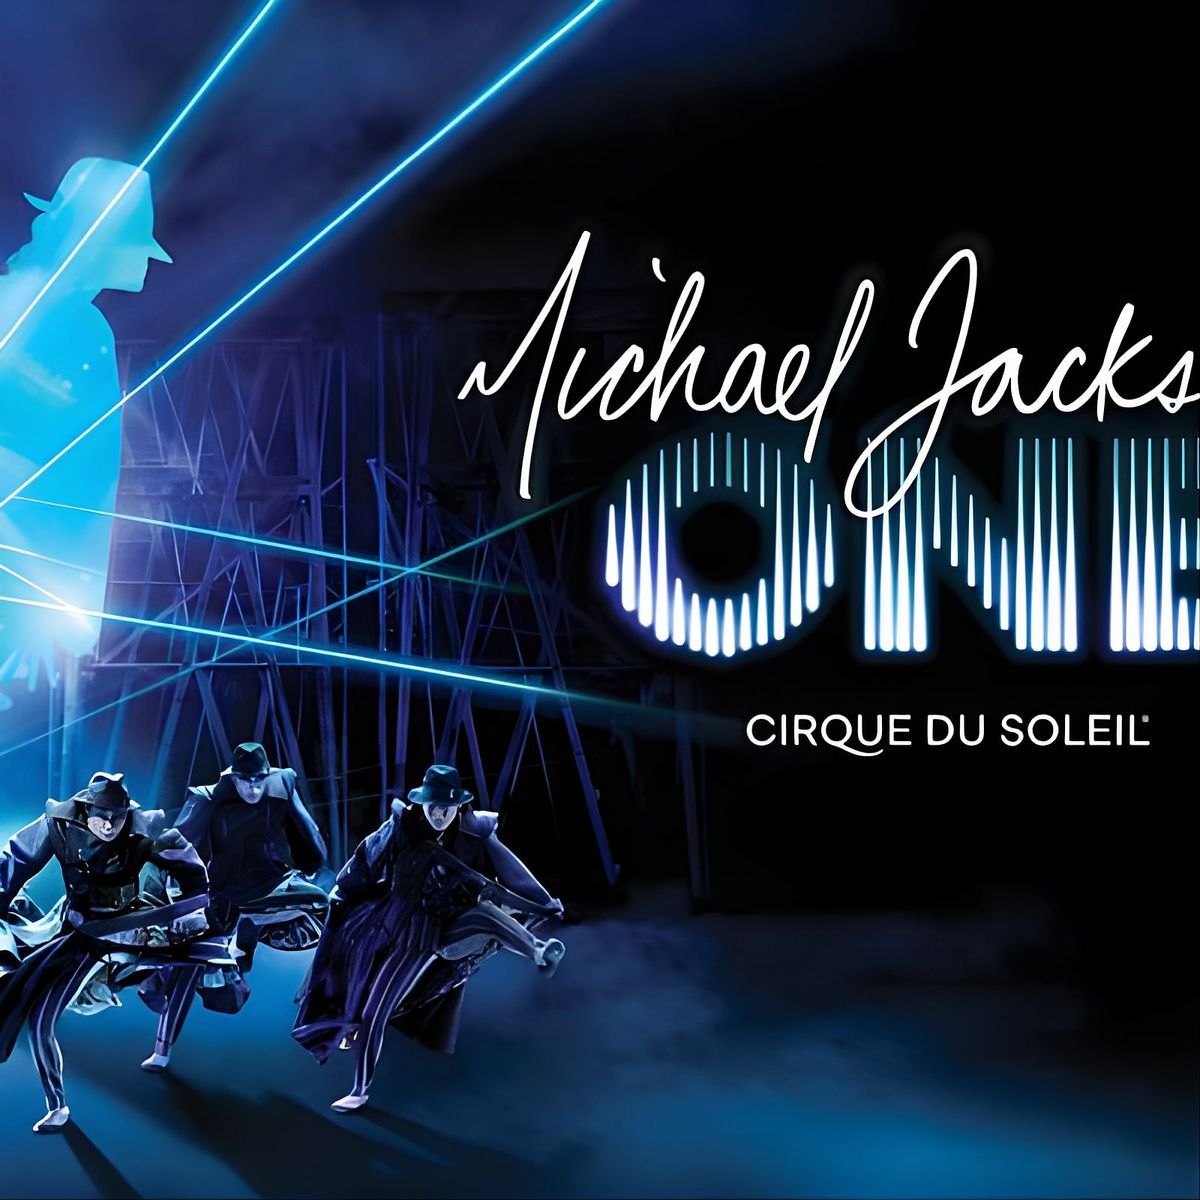 Michael Jackson ONE by Cirque du Soleil\u00ae at Mandalay Bay Resort and Casino